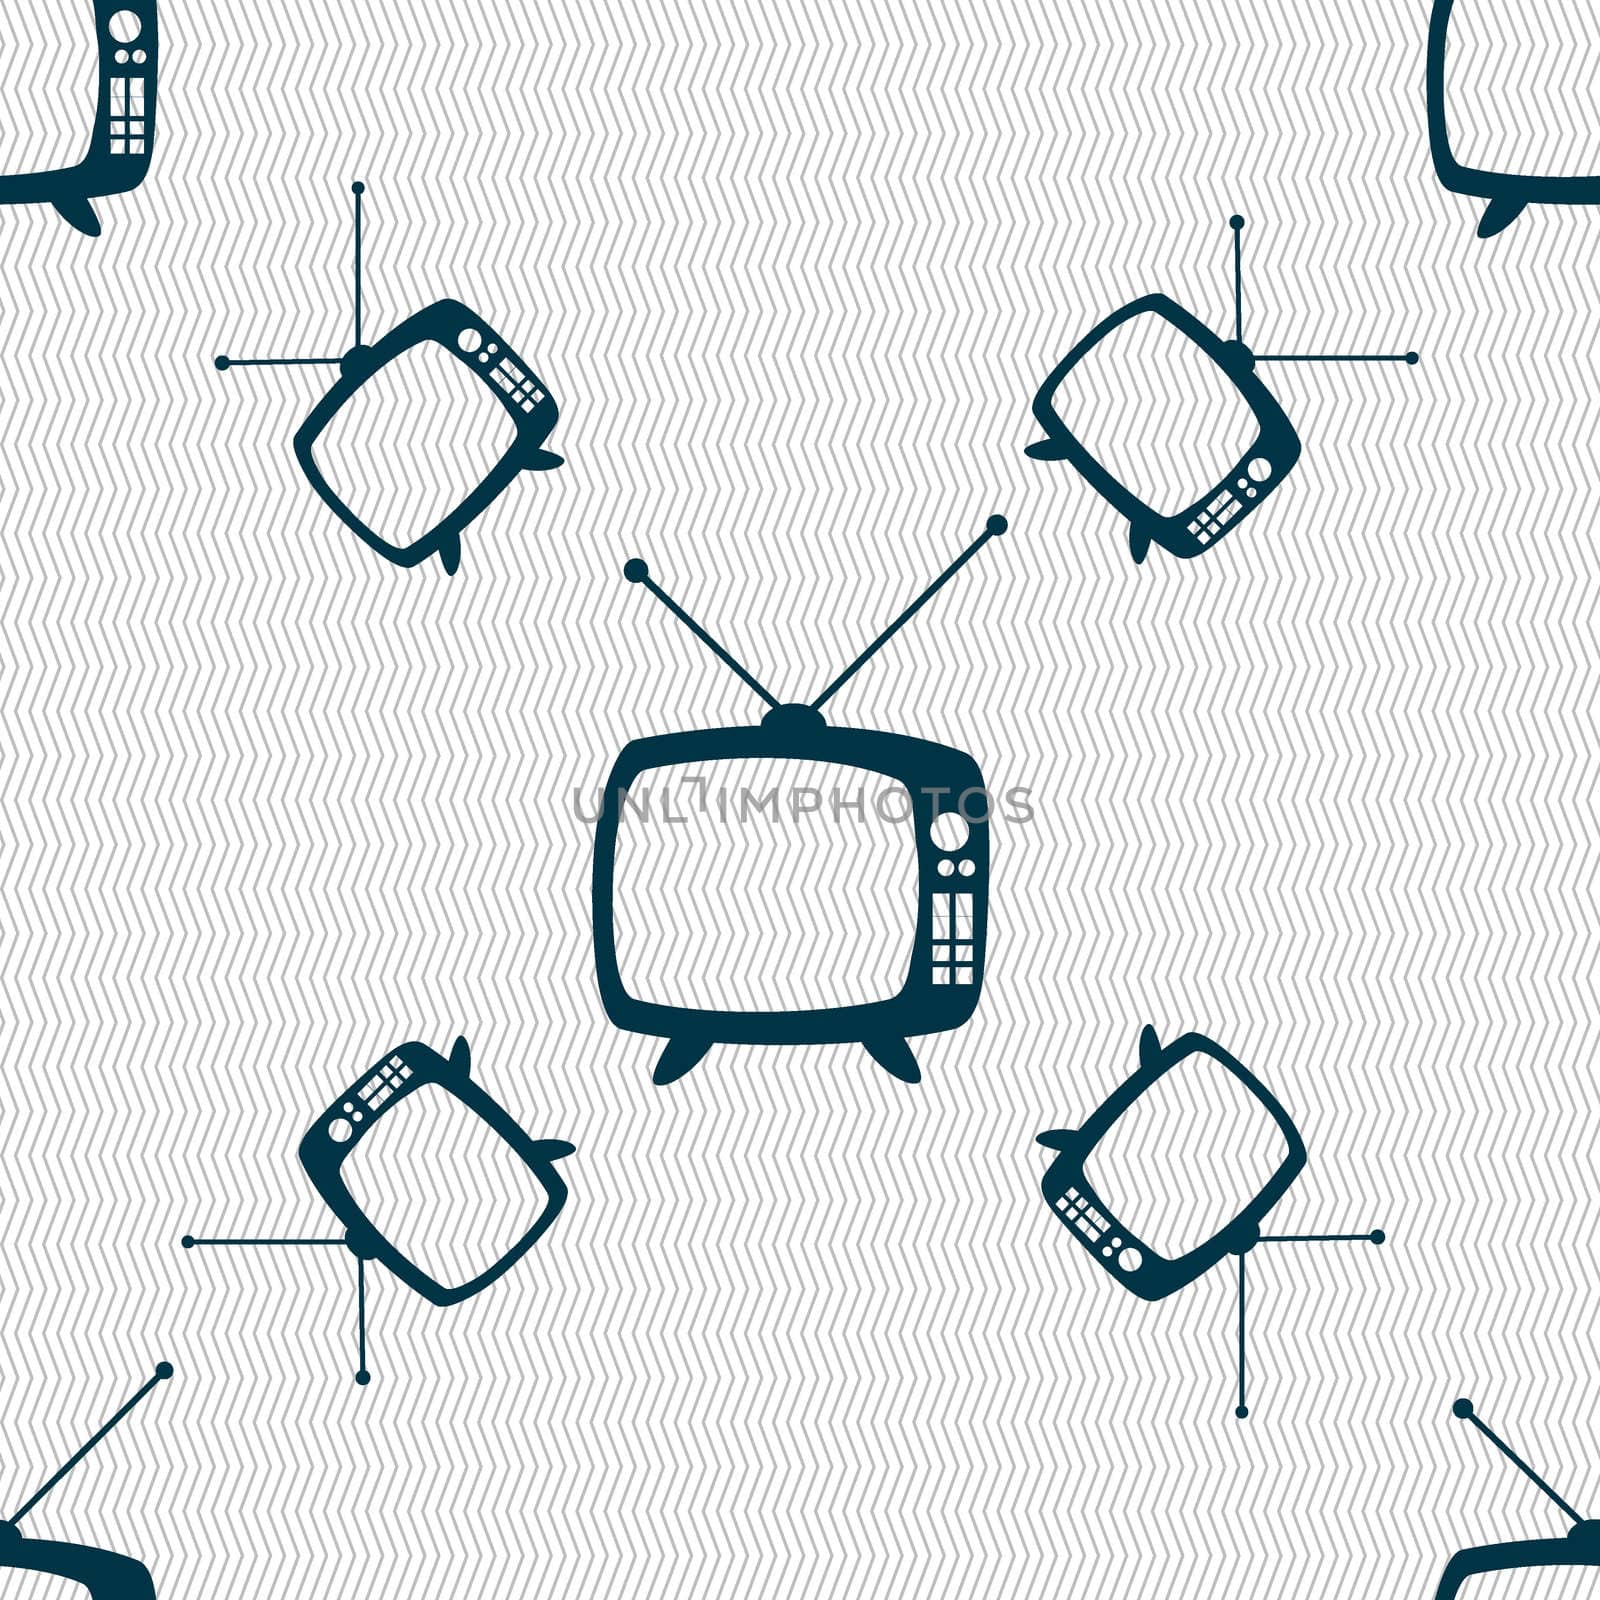 Retro TV mode sign icon. Television set symbol. Seamless pattern with geometric texture. illustration